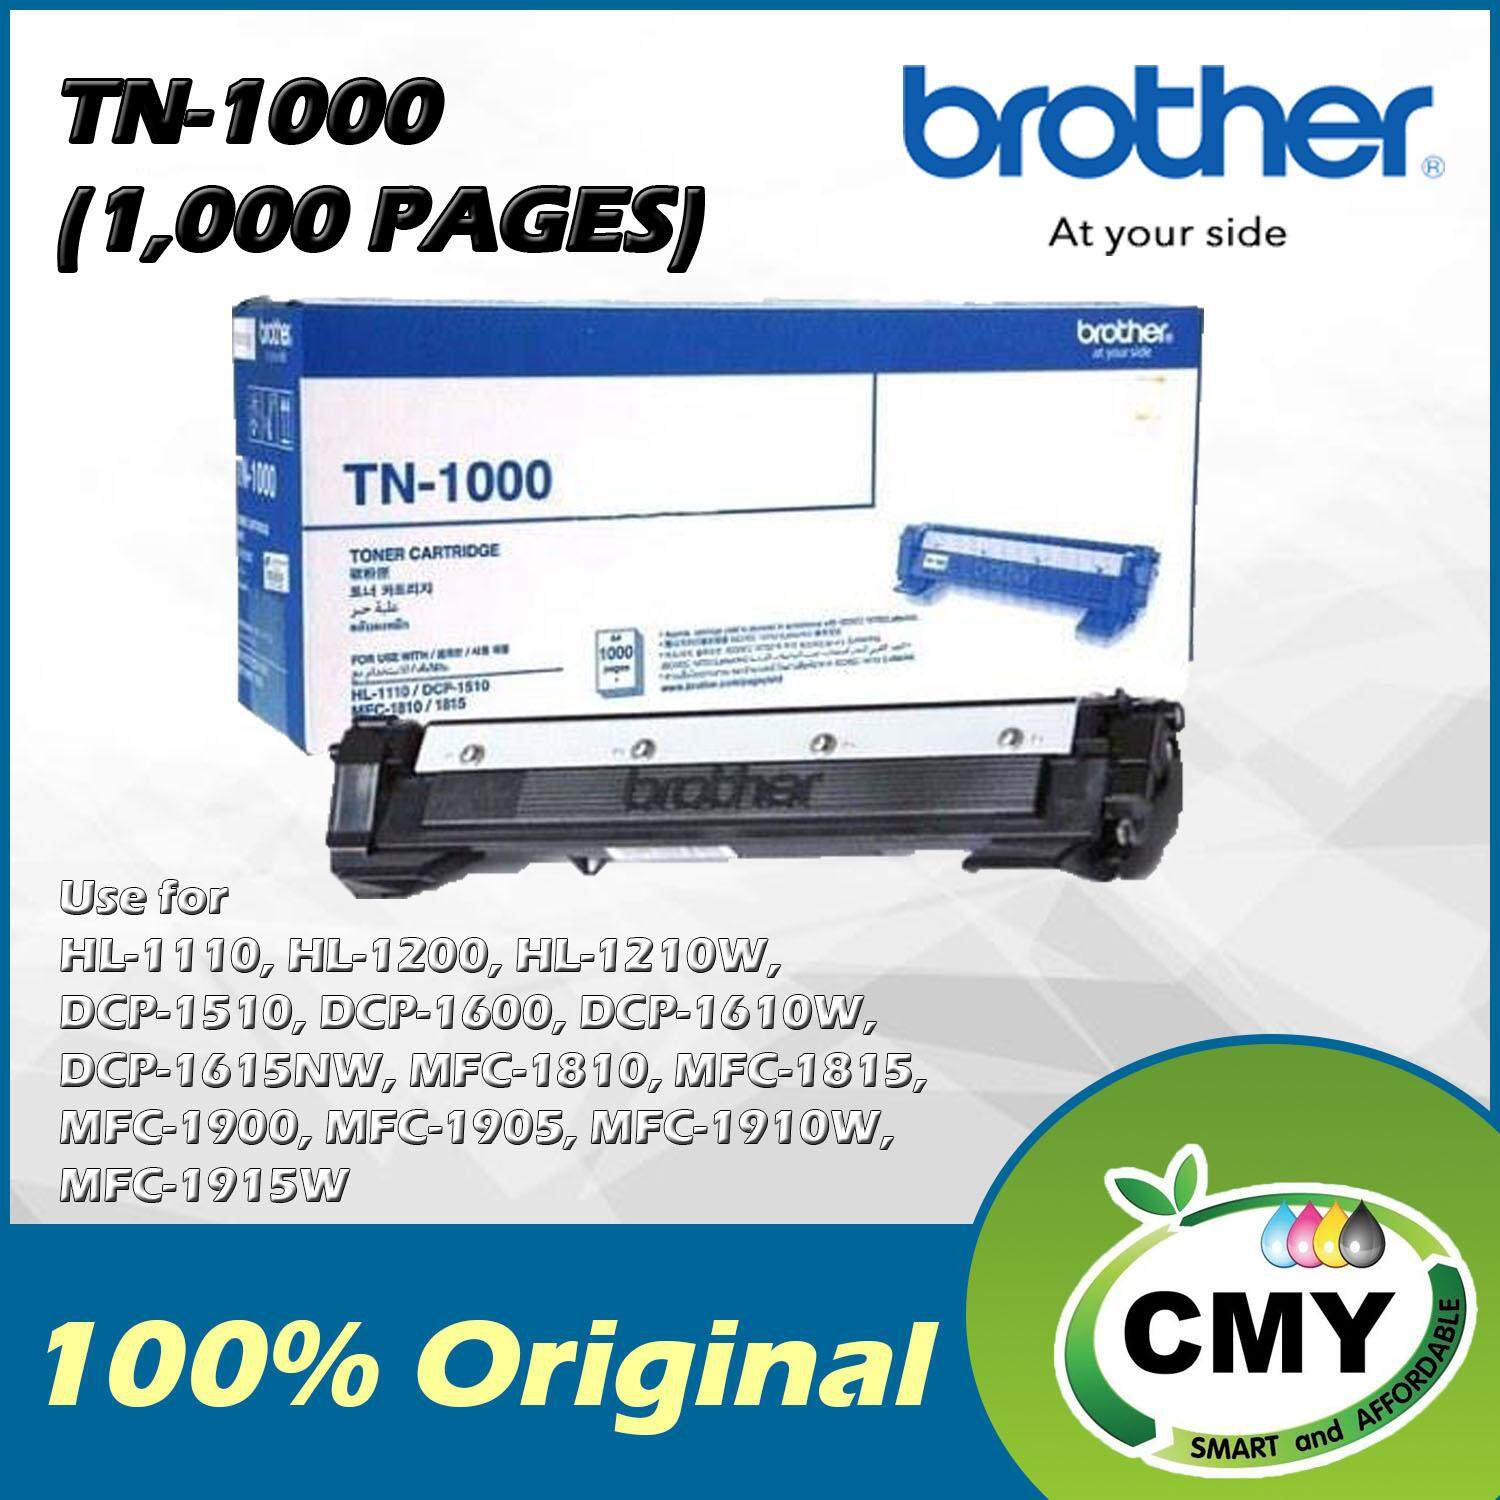 Brother TN1000 / TN-1000 Original Toner Cartridge For Brother HL-1110 / DCP-1510 / MFC-1810 / MFC-1815 / HL-1210W / DCP-1610W / MFC-1910W Printer hl1110 dcp1510 mfc1810 mfc1815 hl1210w dcp1610w mfc1910w ink